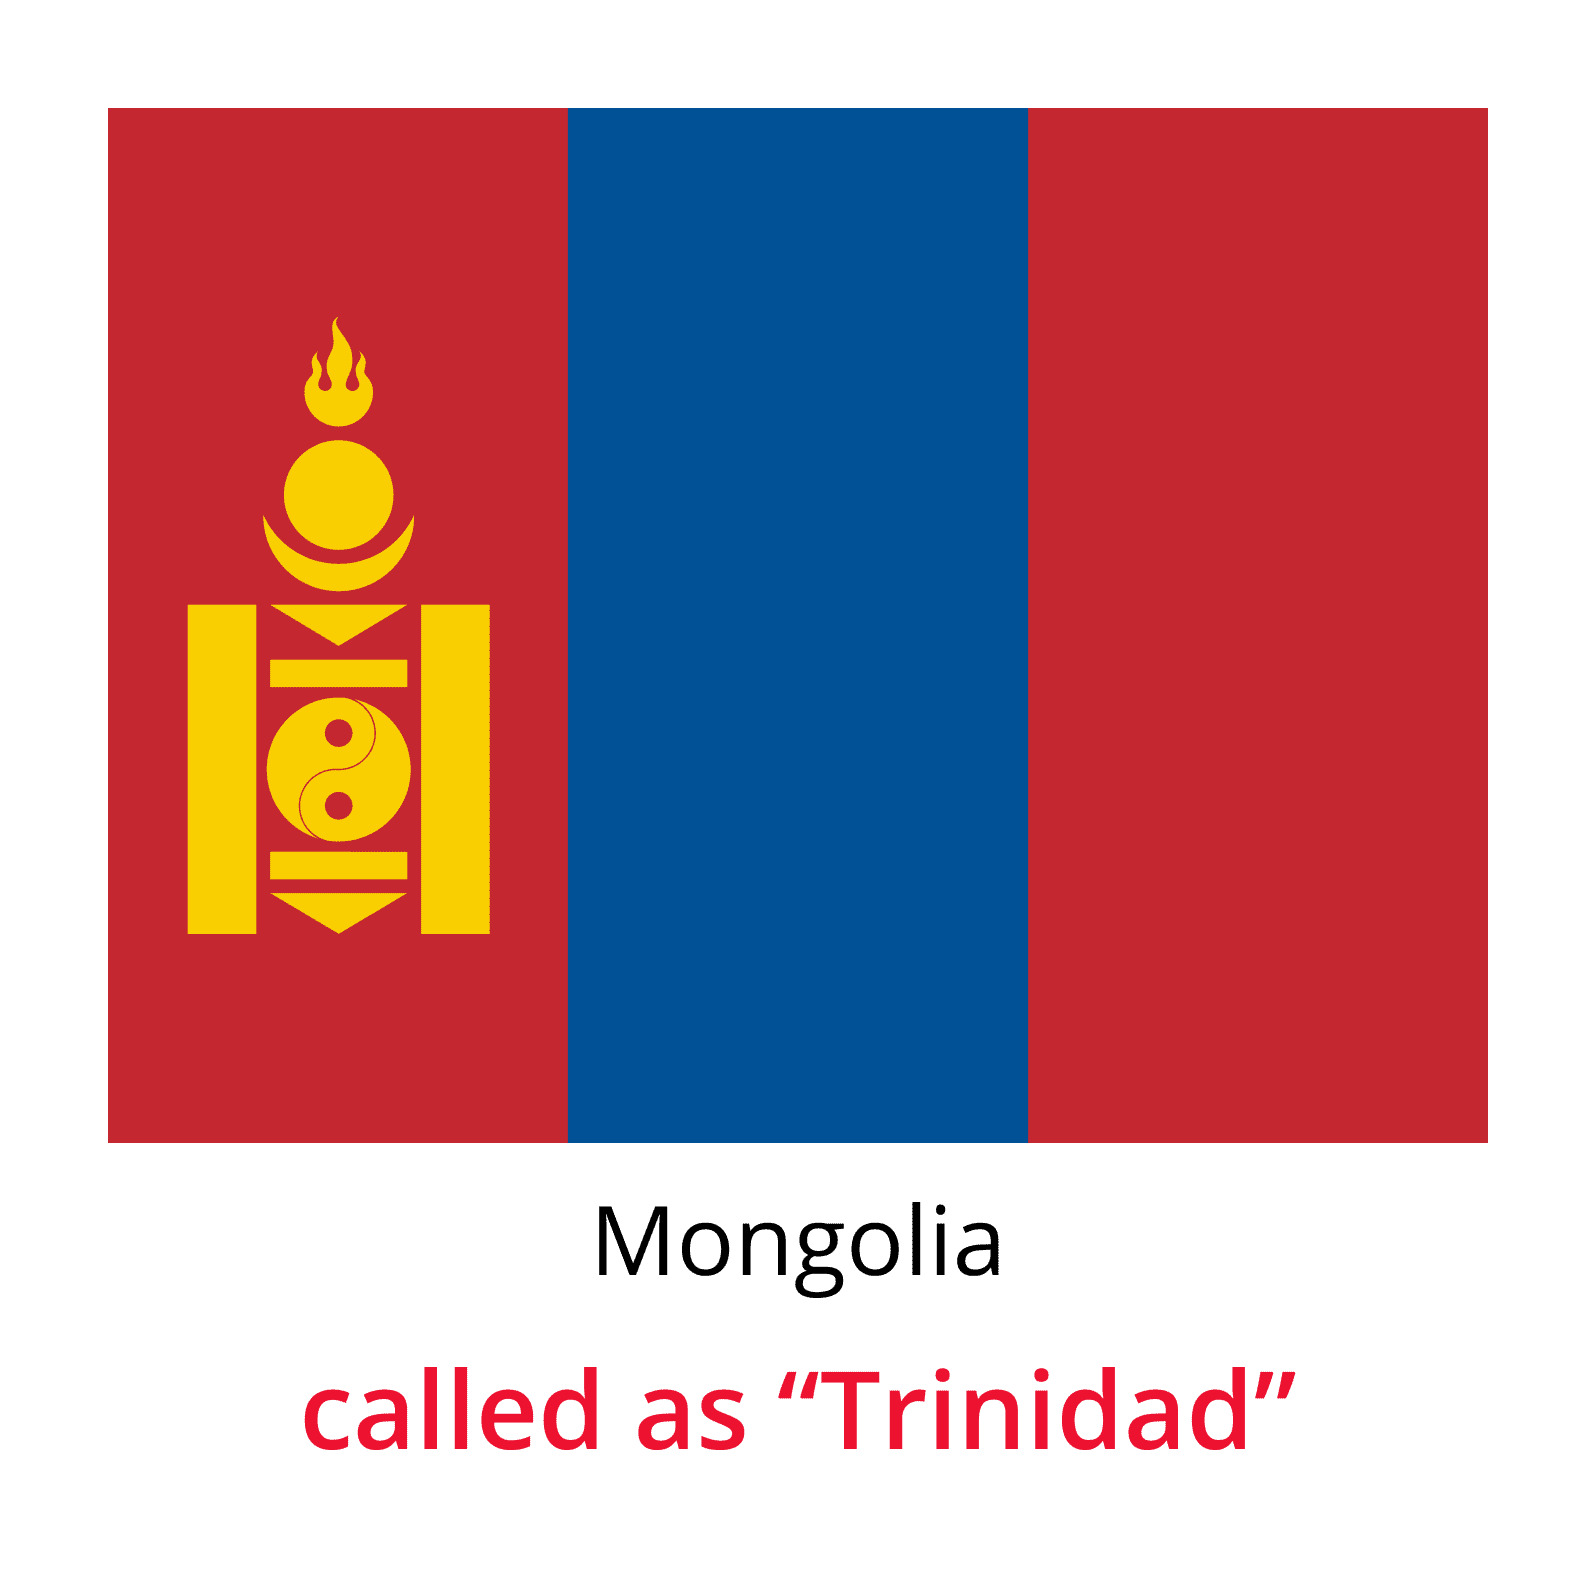 Chit fund Globally-Mongolia